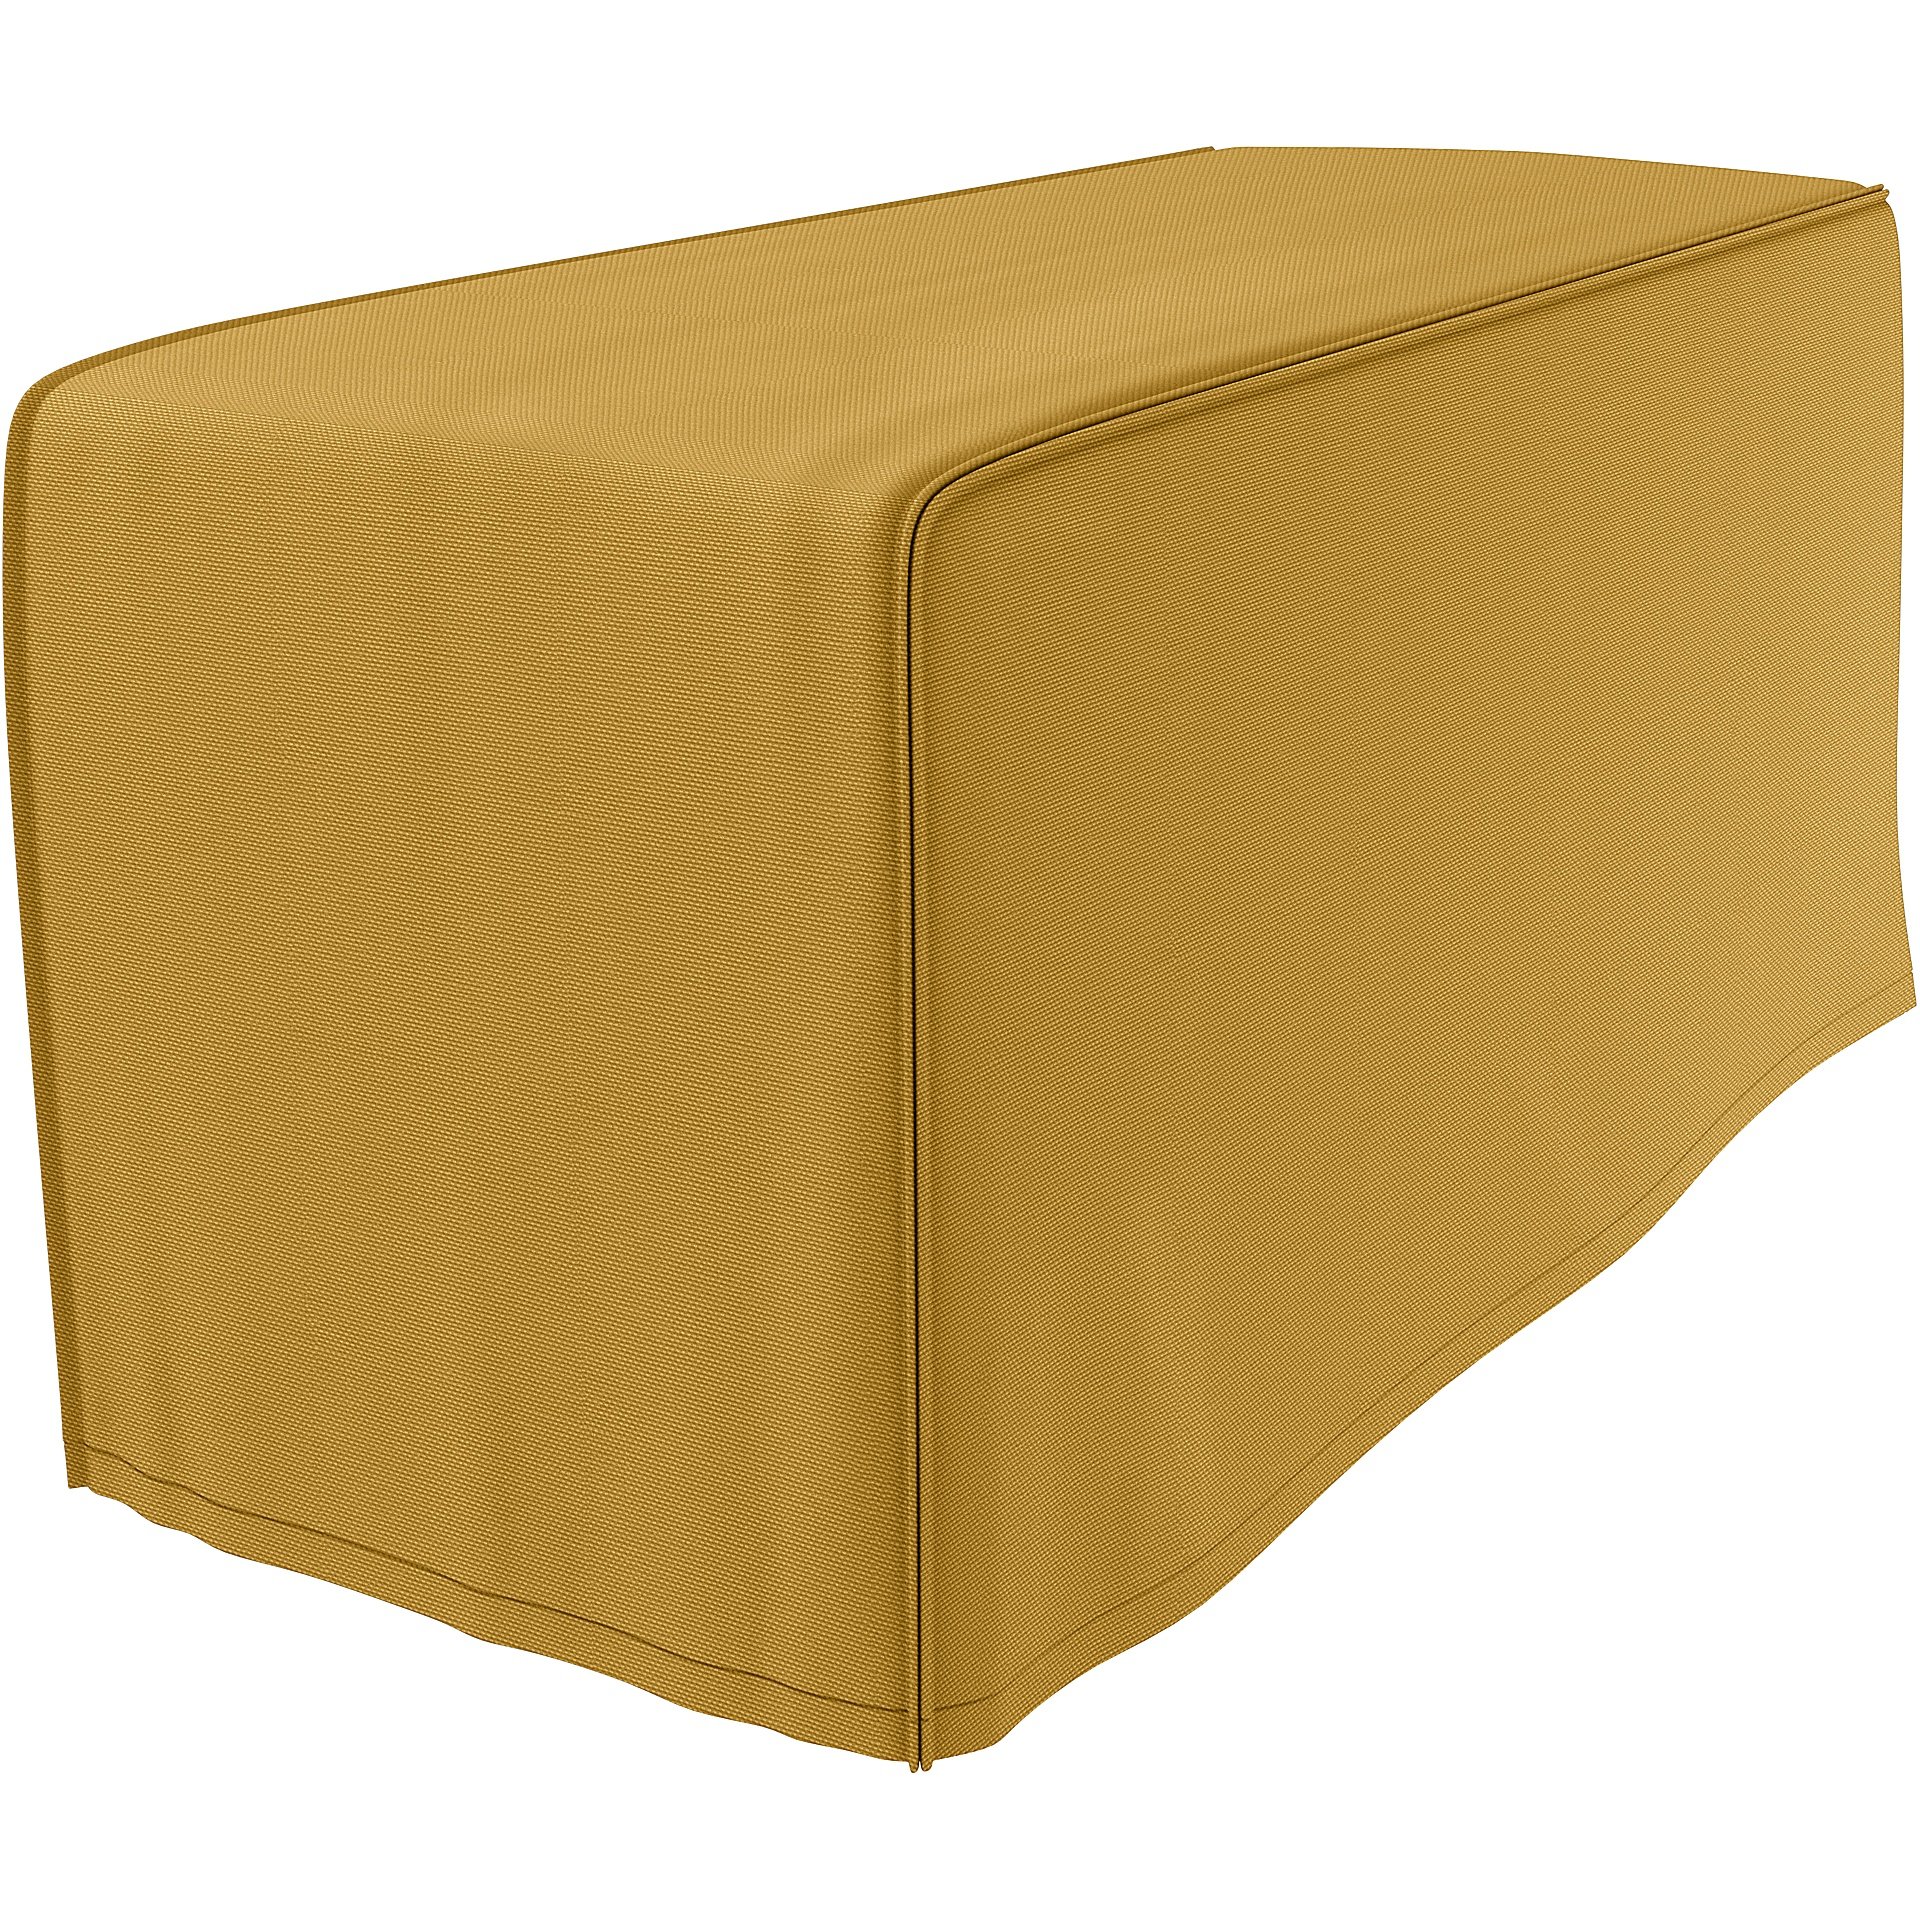 IKEA - Kivik Armrest Protectors (One pair), Honey Mustard, Cotton - Bemz